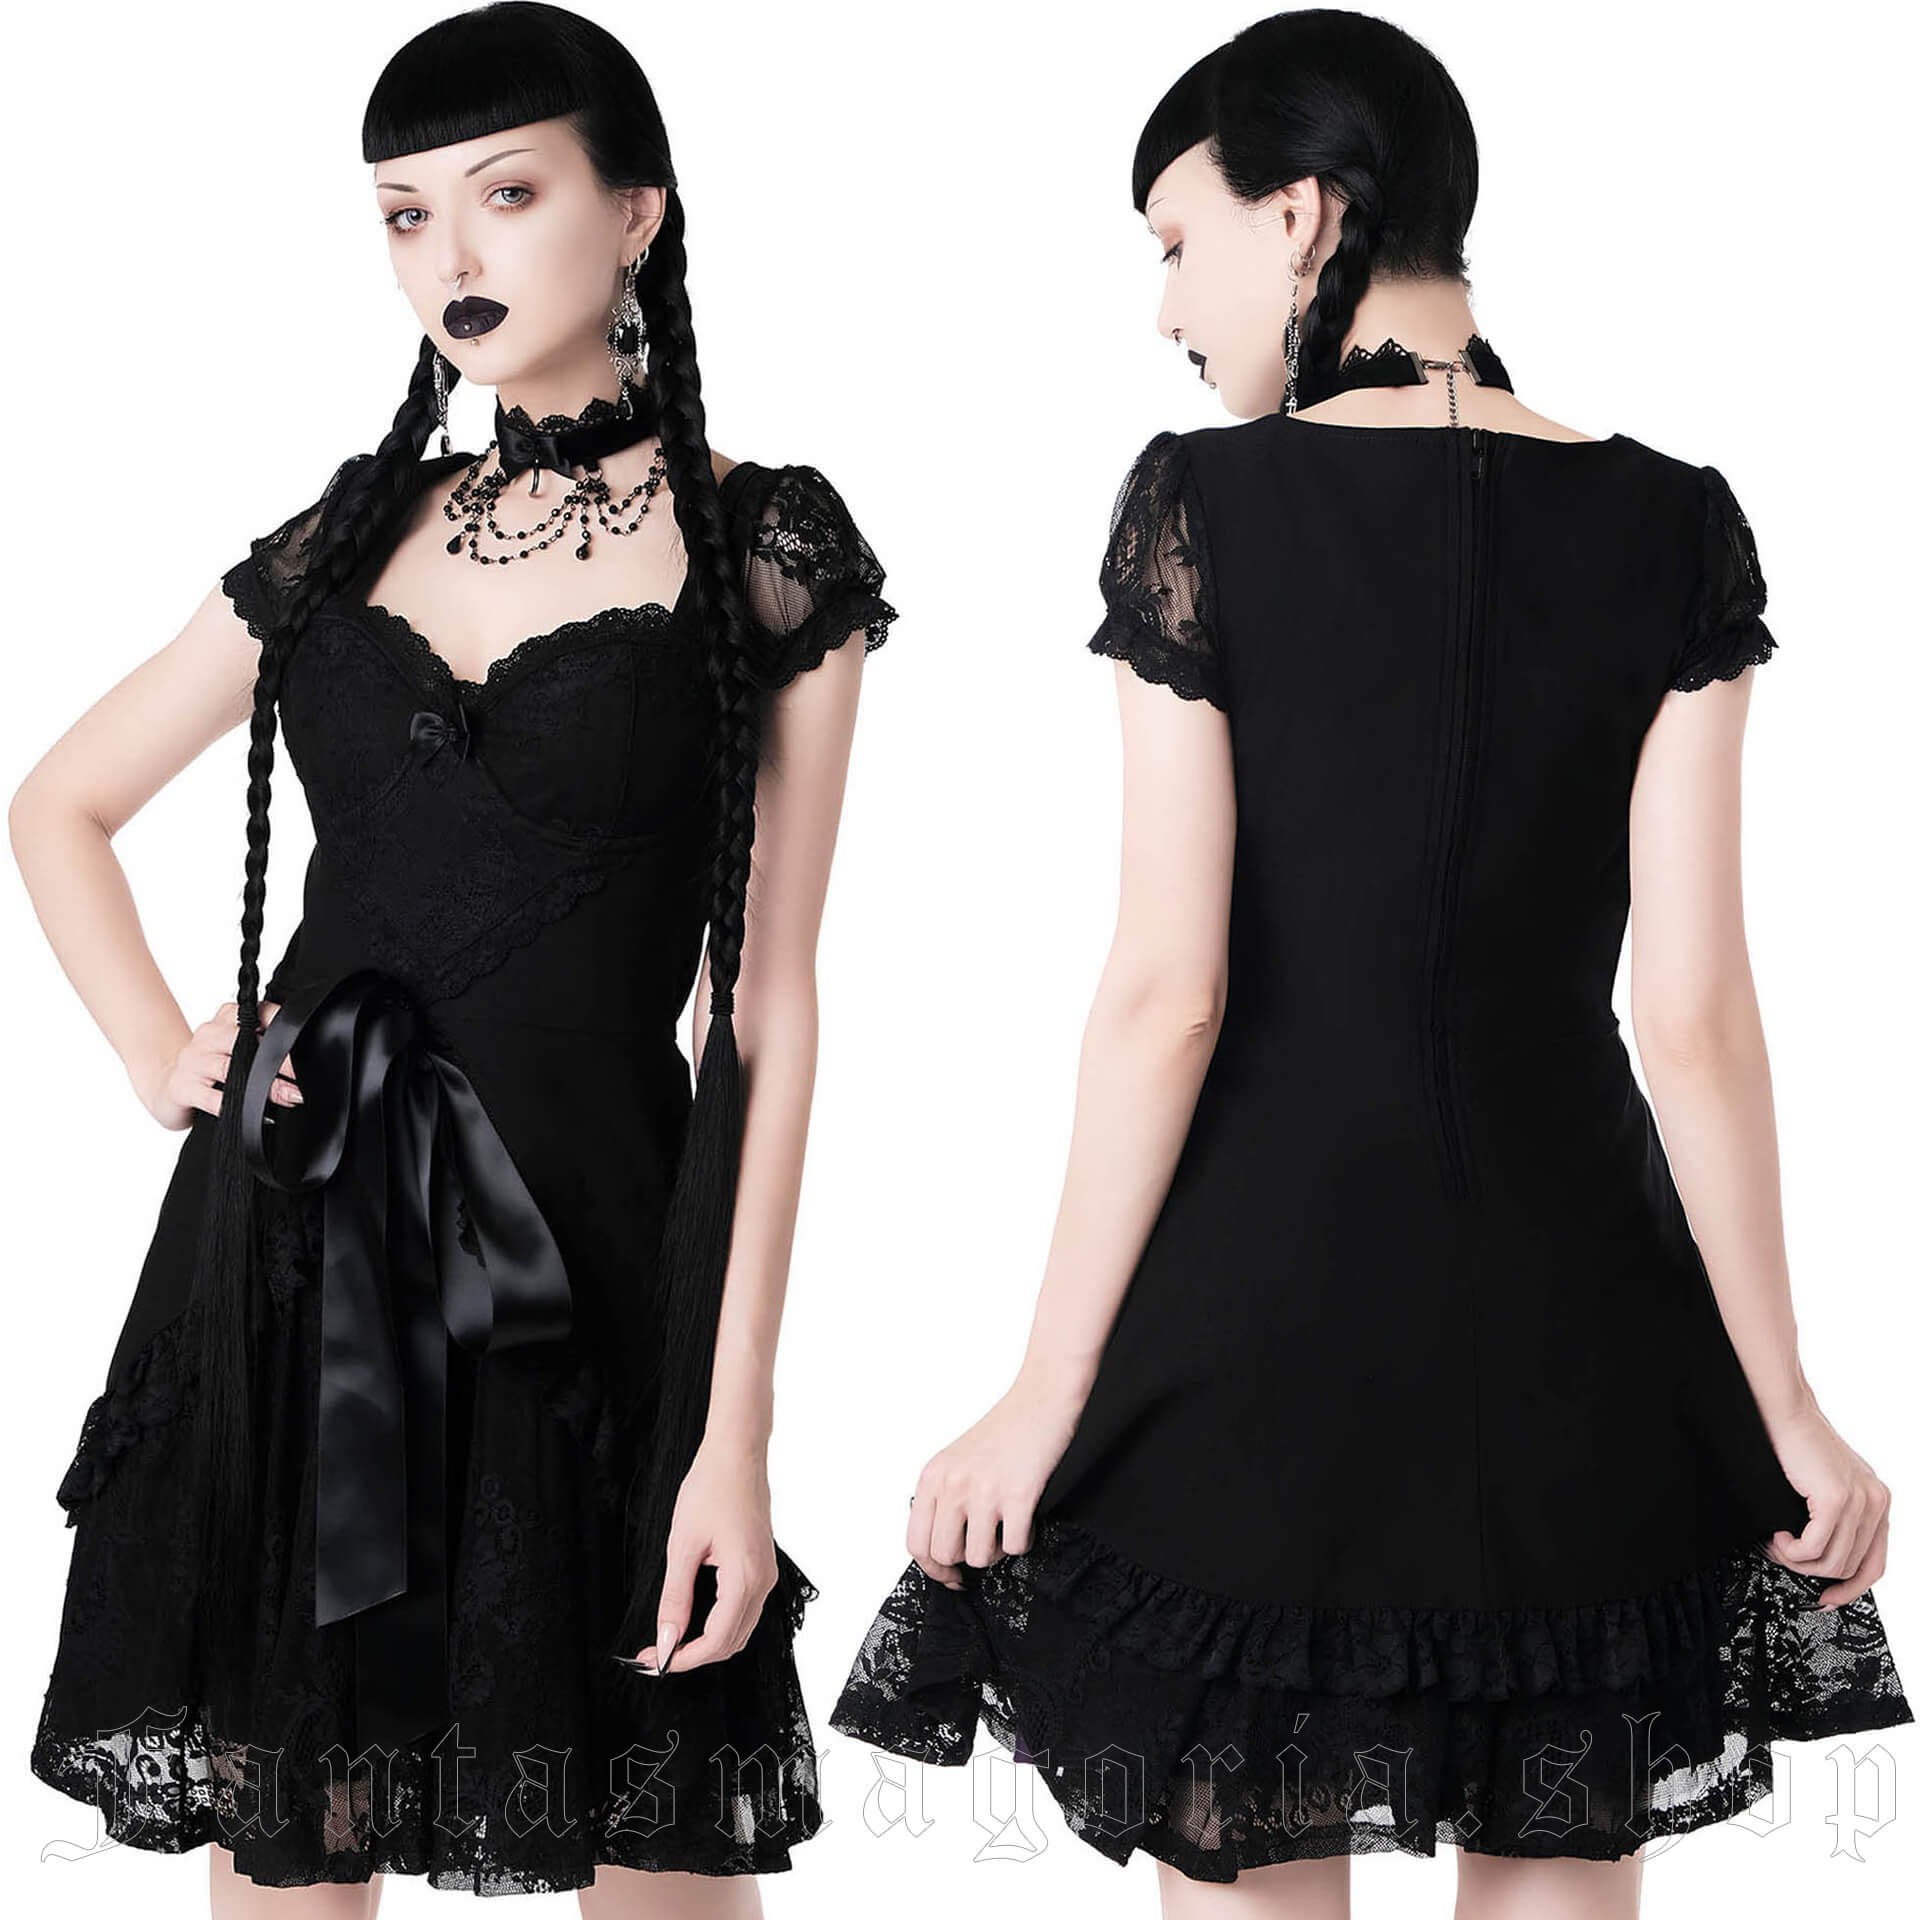 Hocus Party Black Dress